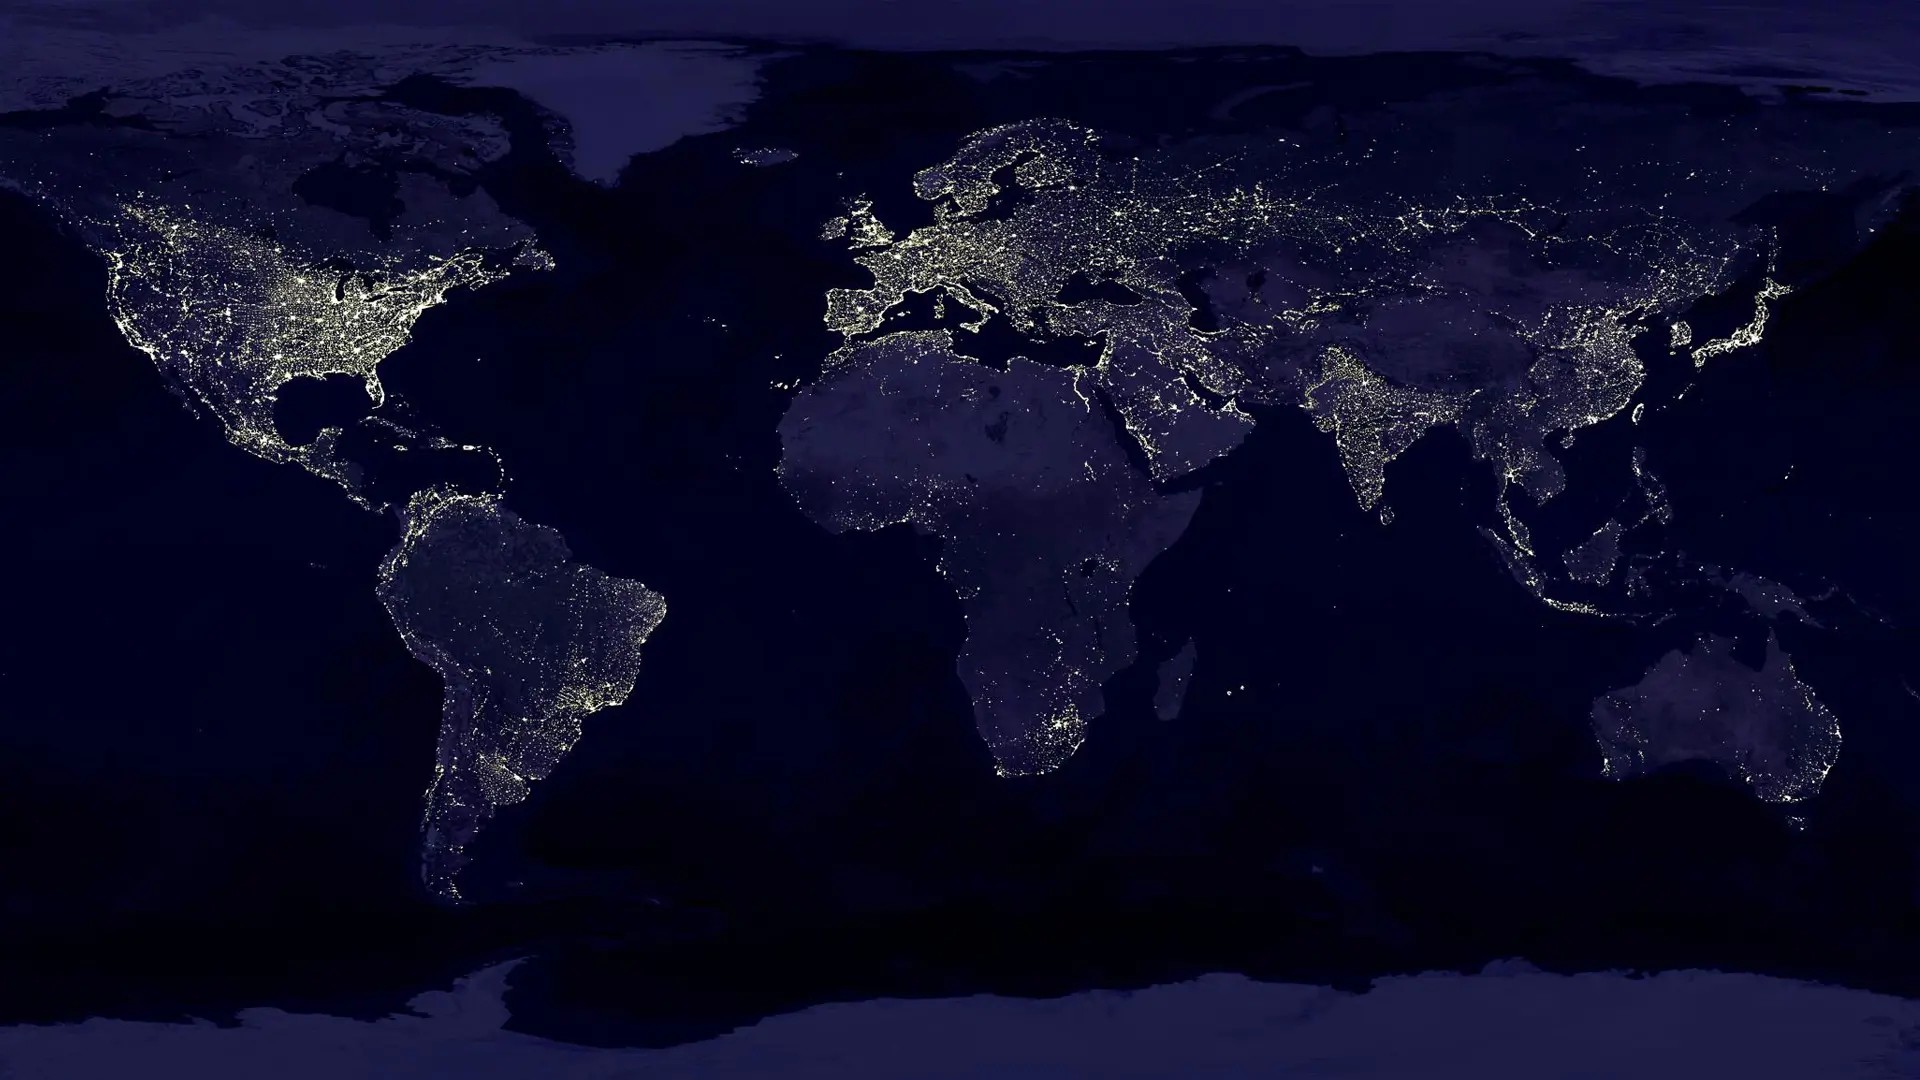 Night shot of Earth